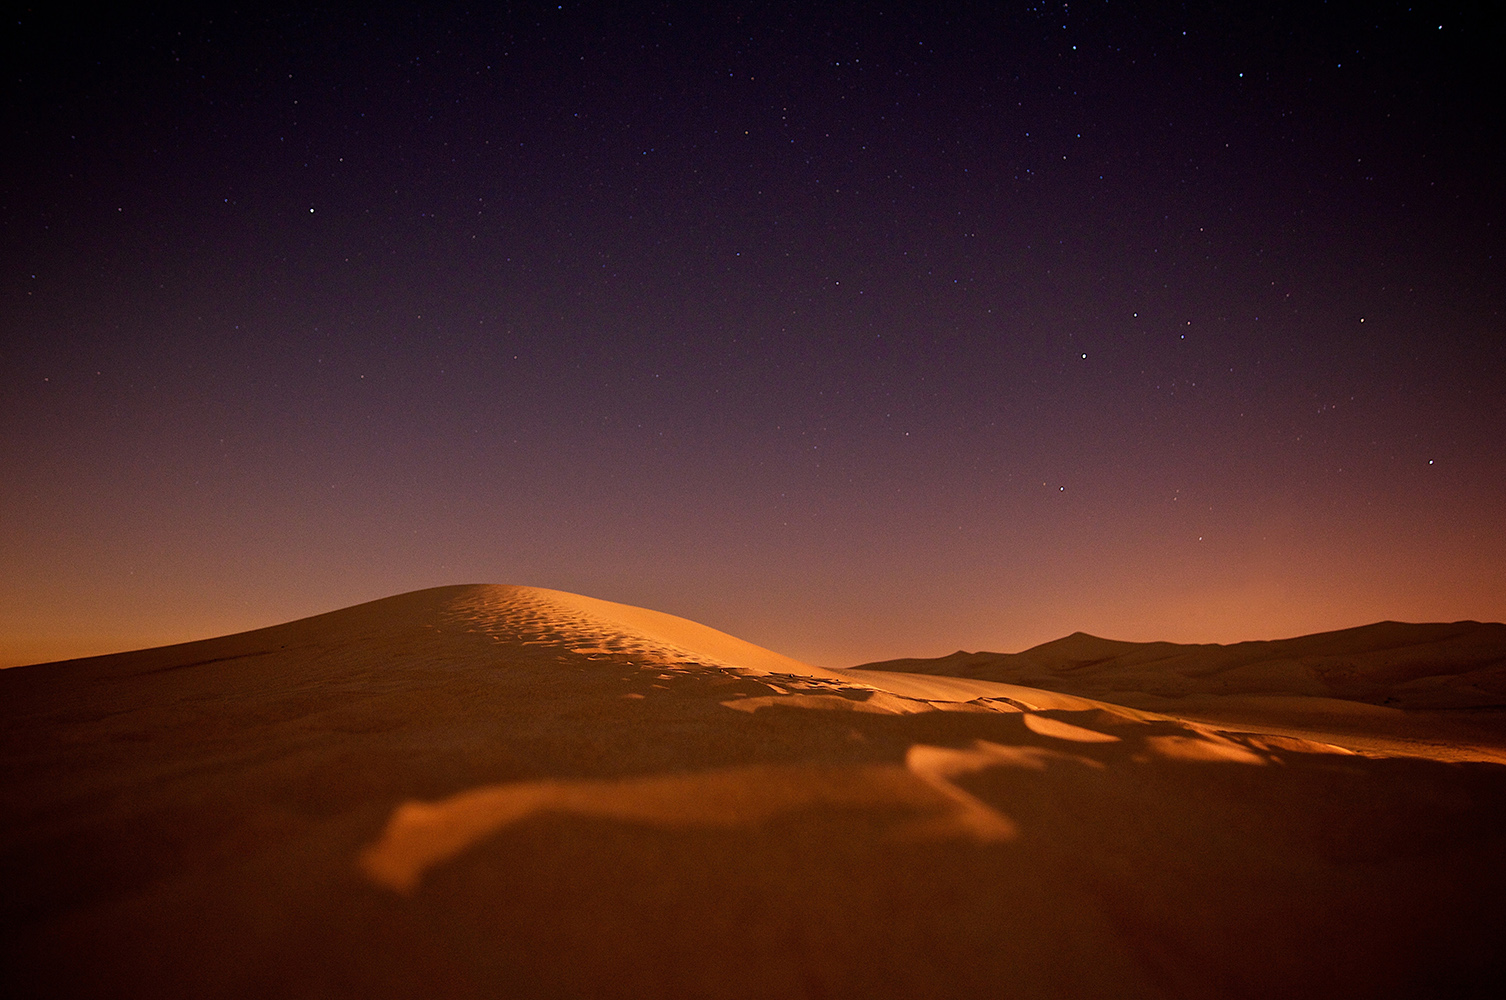 Desert dunes under a starry night scare